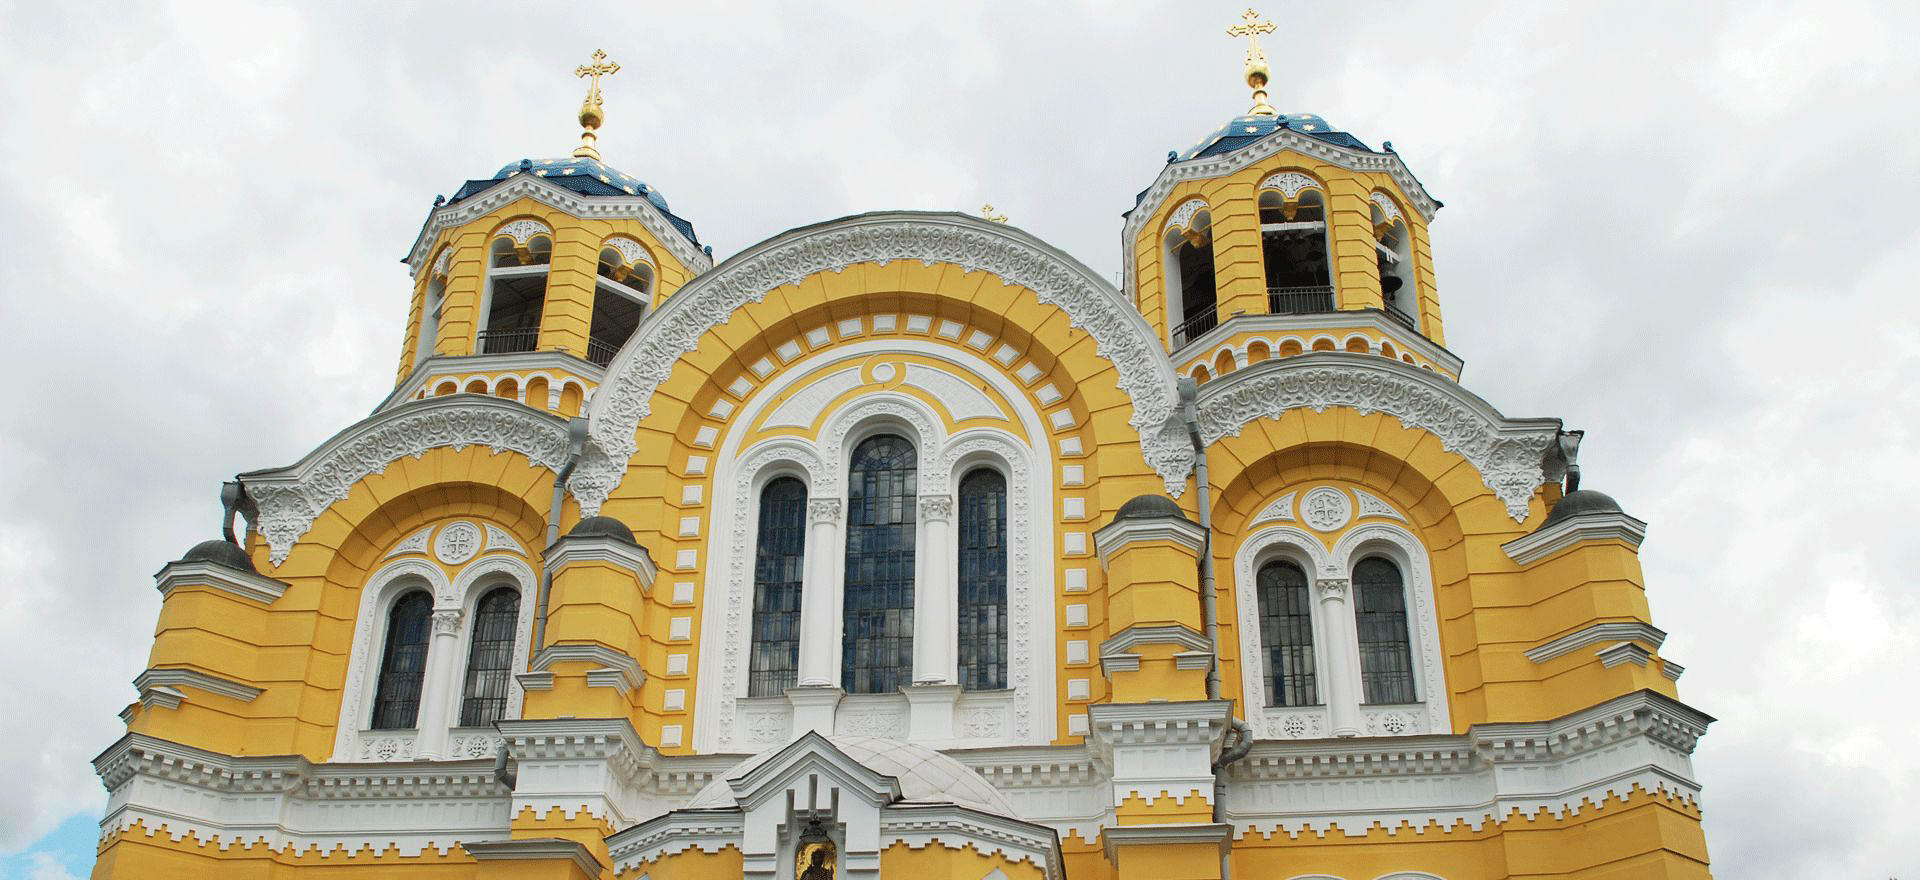 Painted church in Kiev - Ukraine Holidays